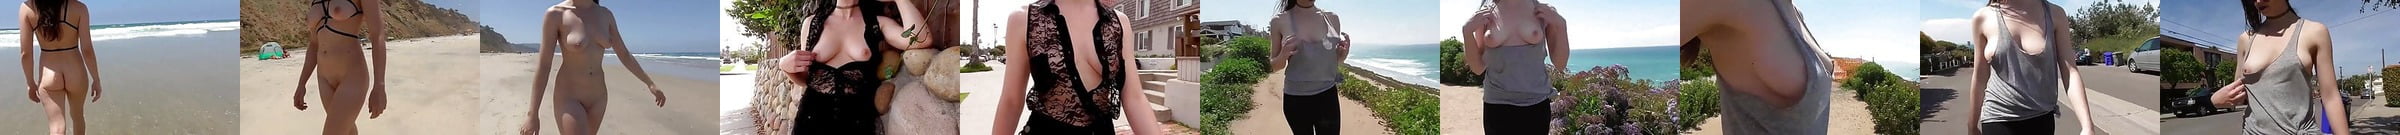 Vidéos Porno Mature Neighbor Walks With Bare Ass Outdoors Durée En